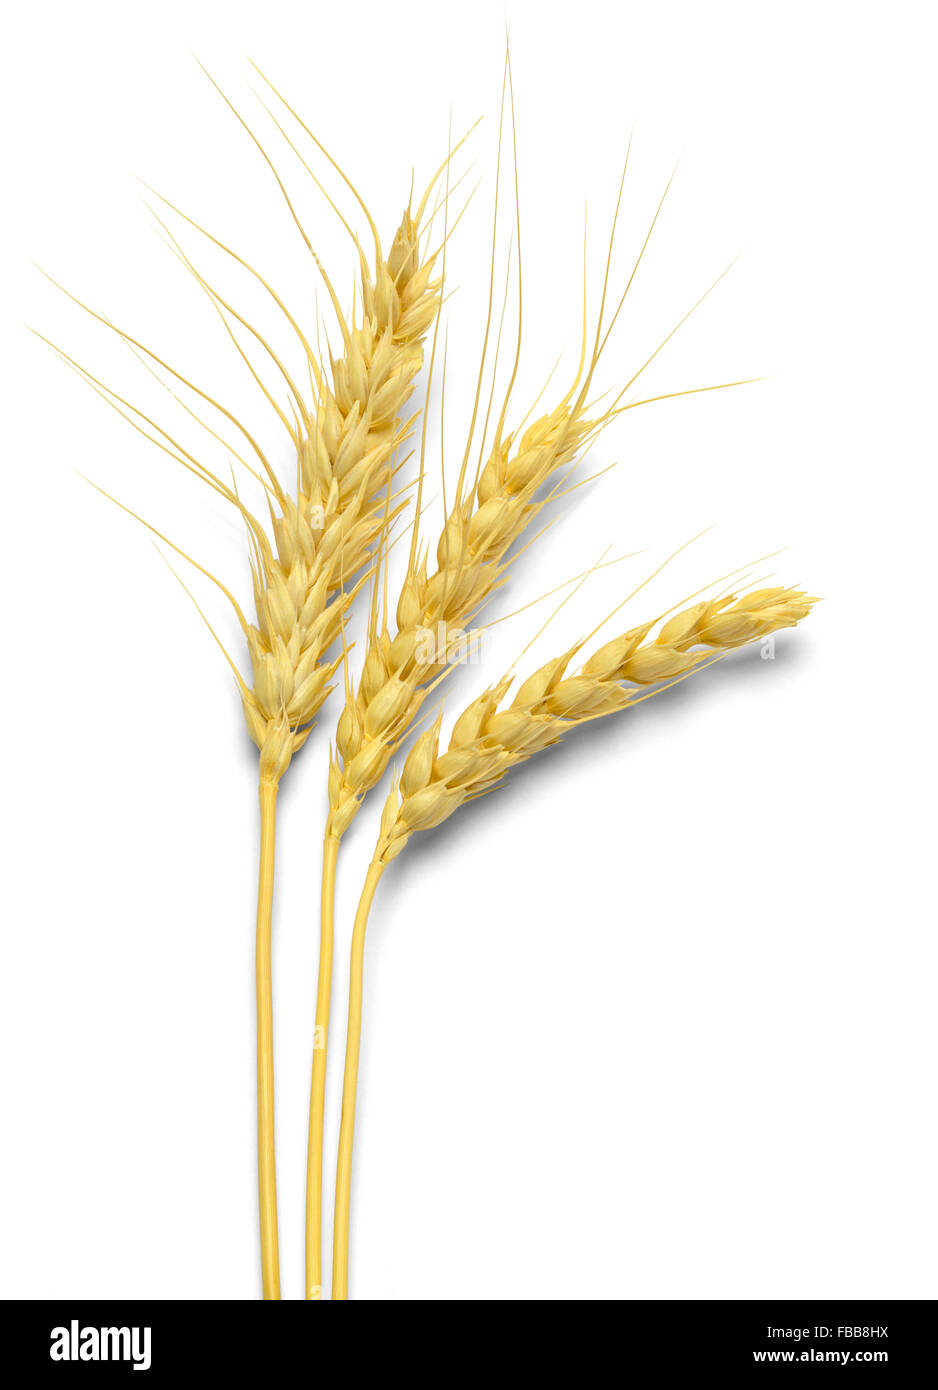 Three Stocks of Wheat Isolated on White Background. Stock Photo